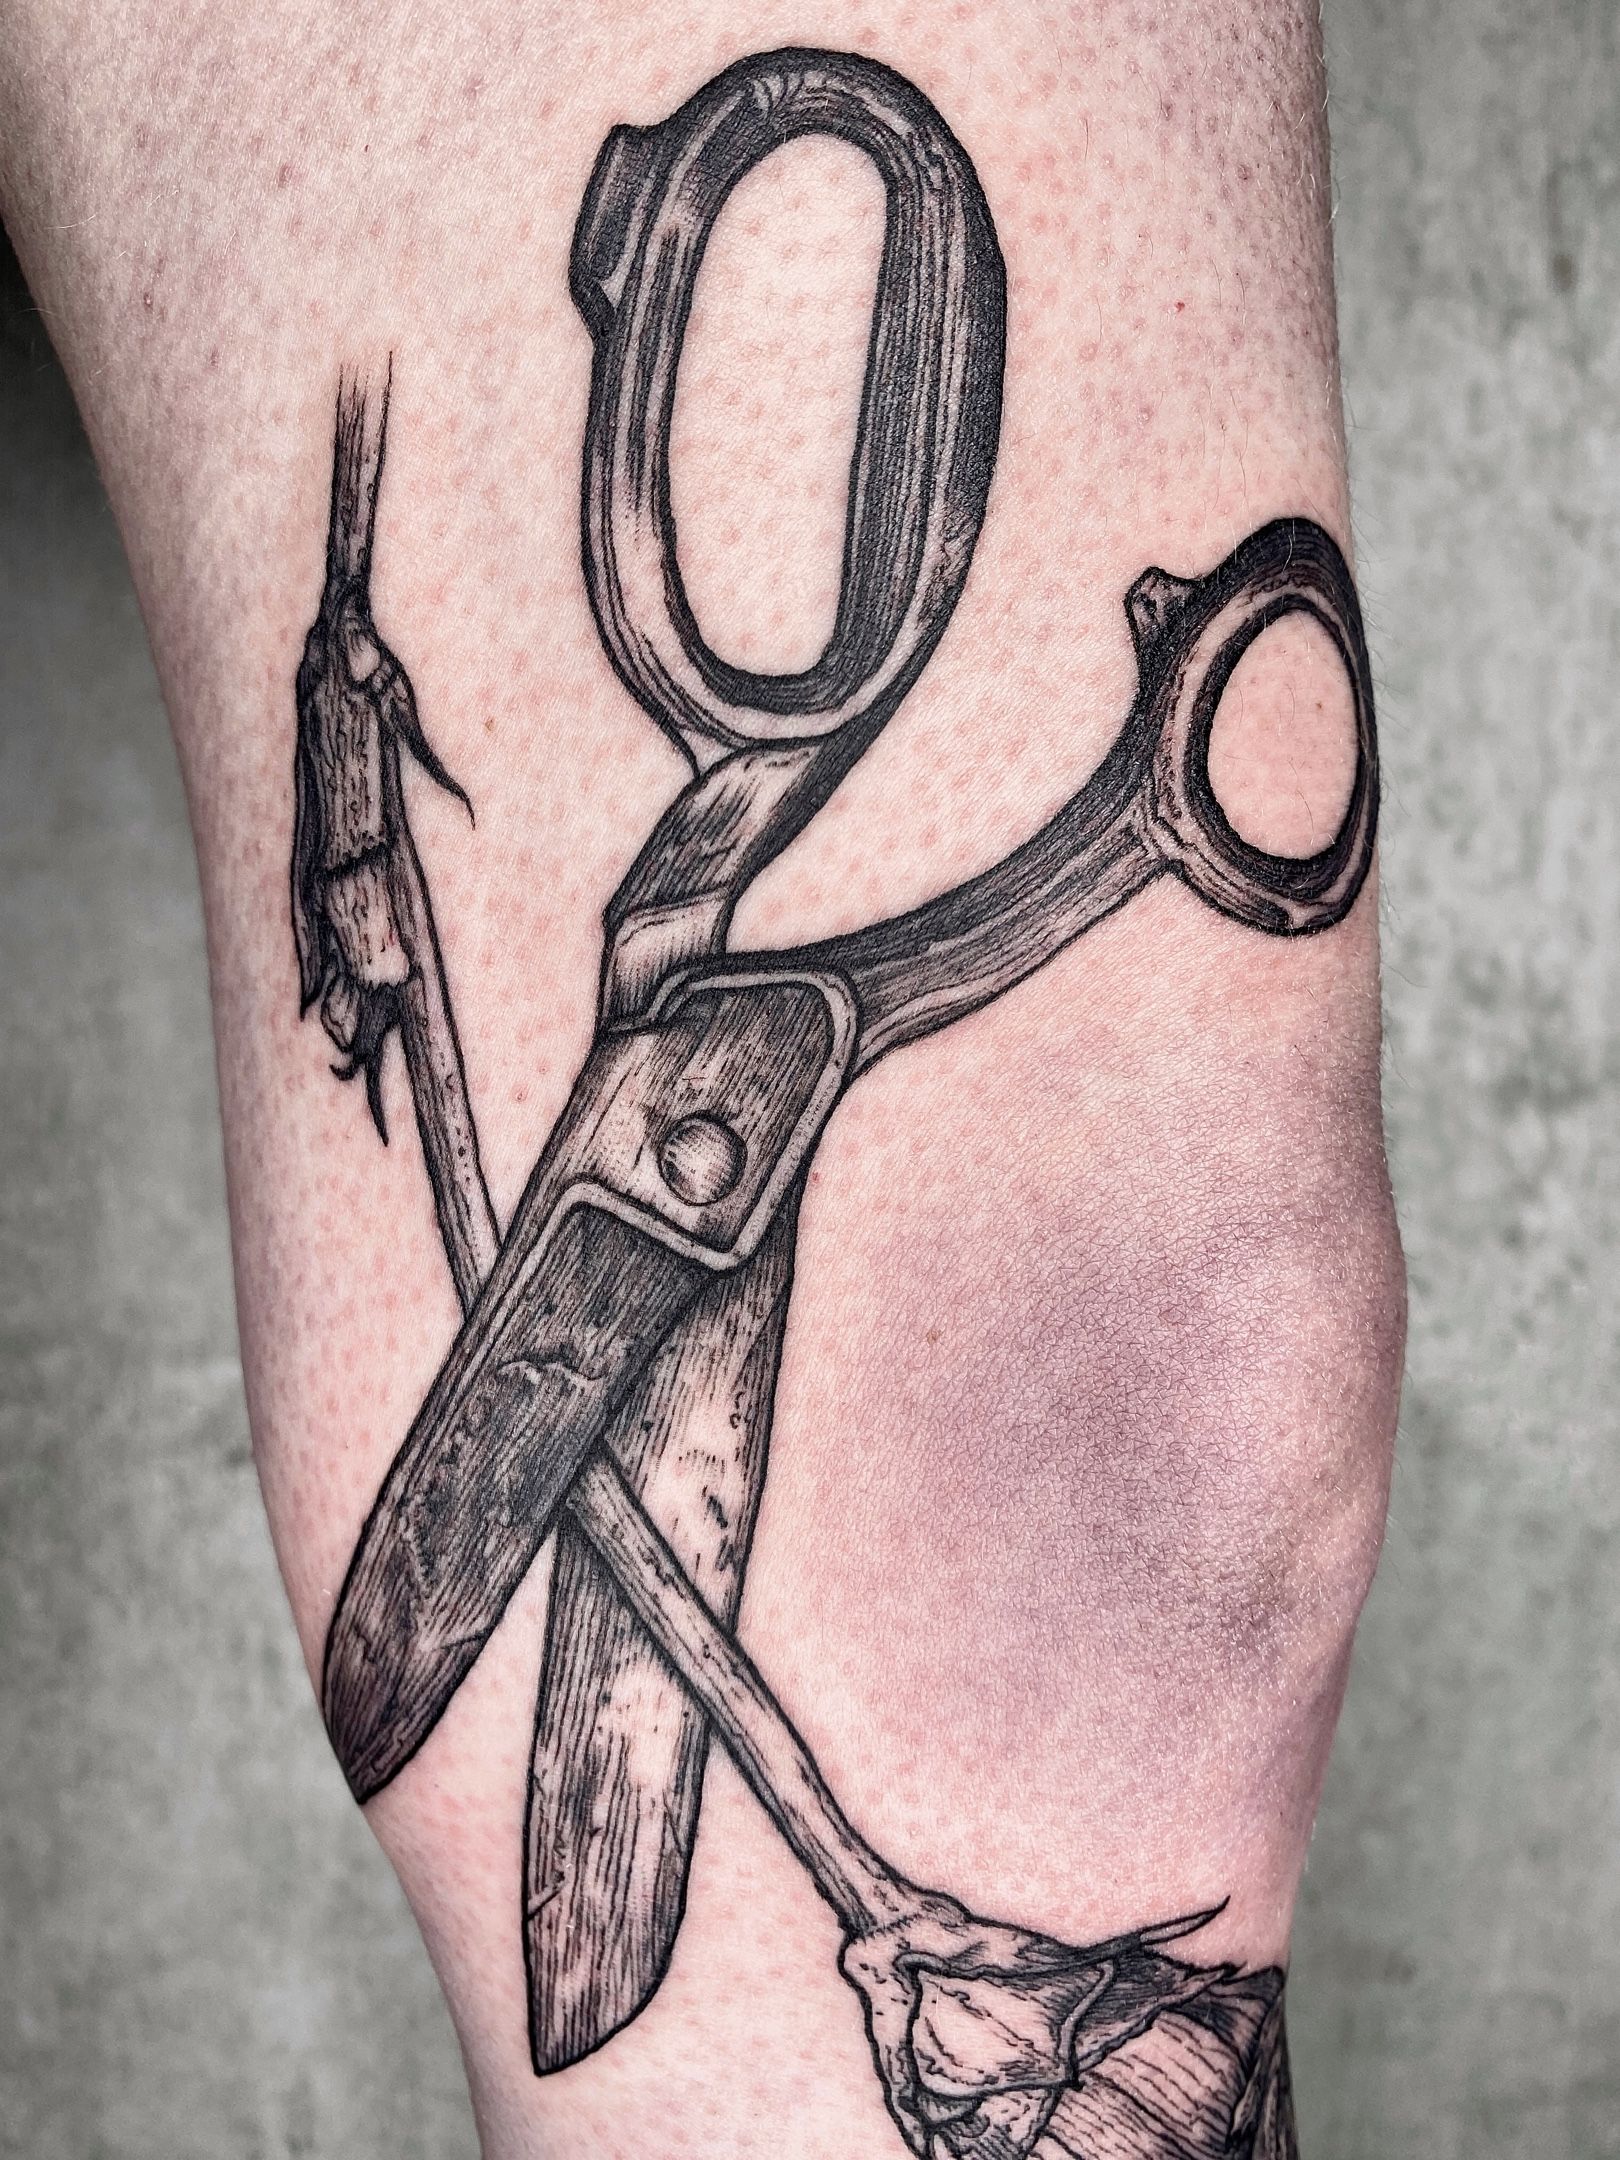 Tattoo Body Piercing Tools Surgical Clamp Gross Maier Sponge Forceps | eBay